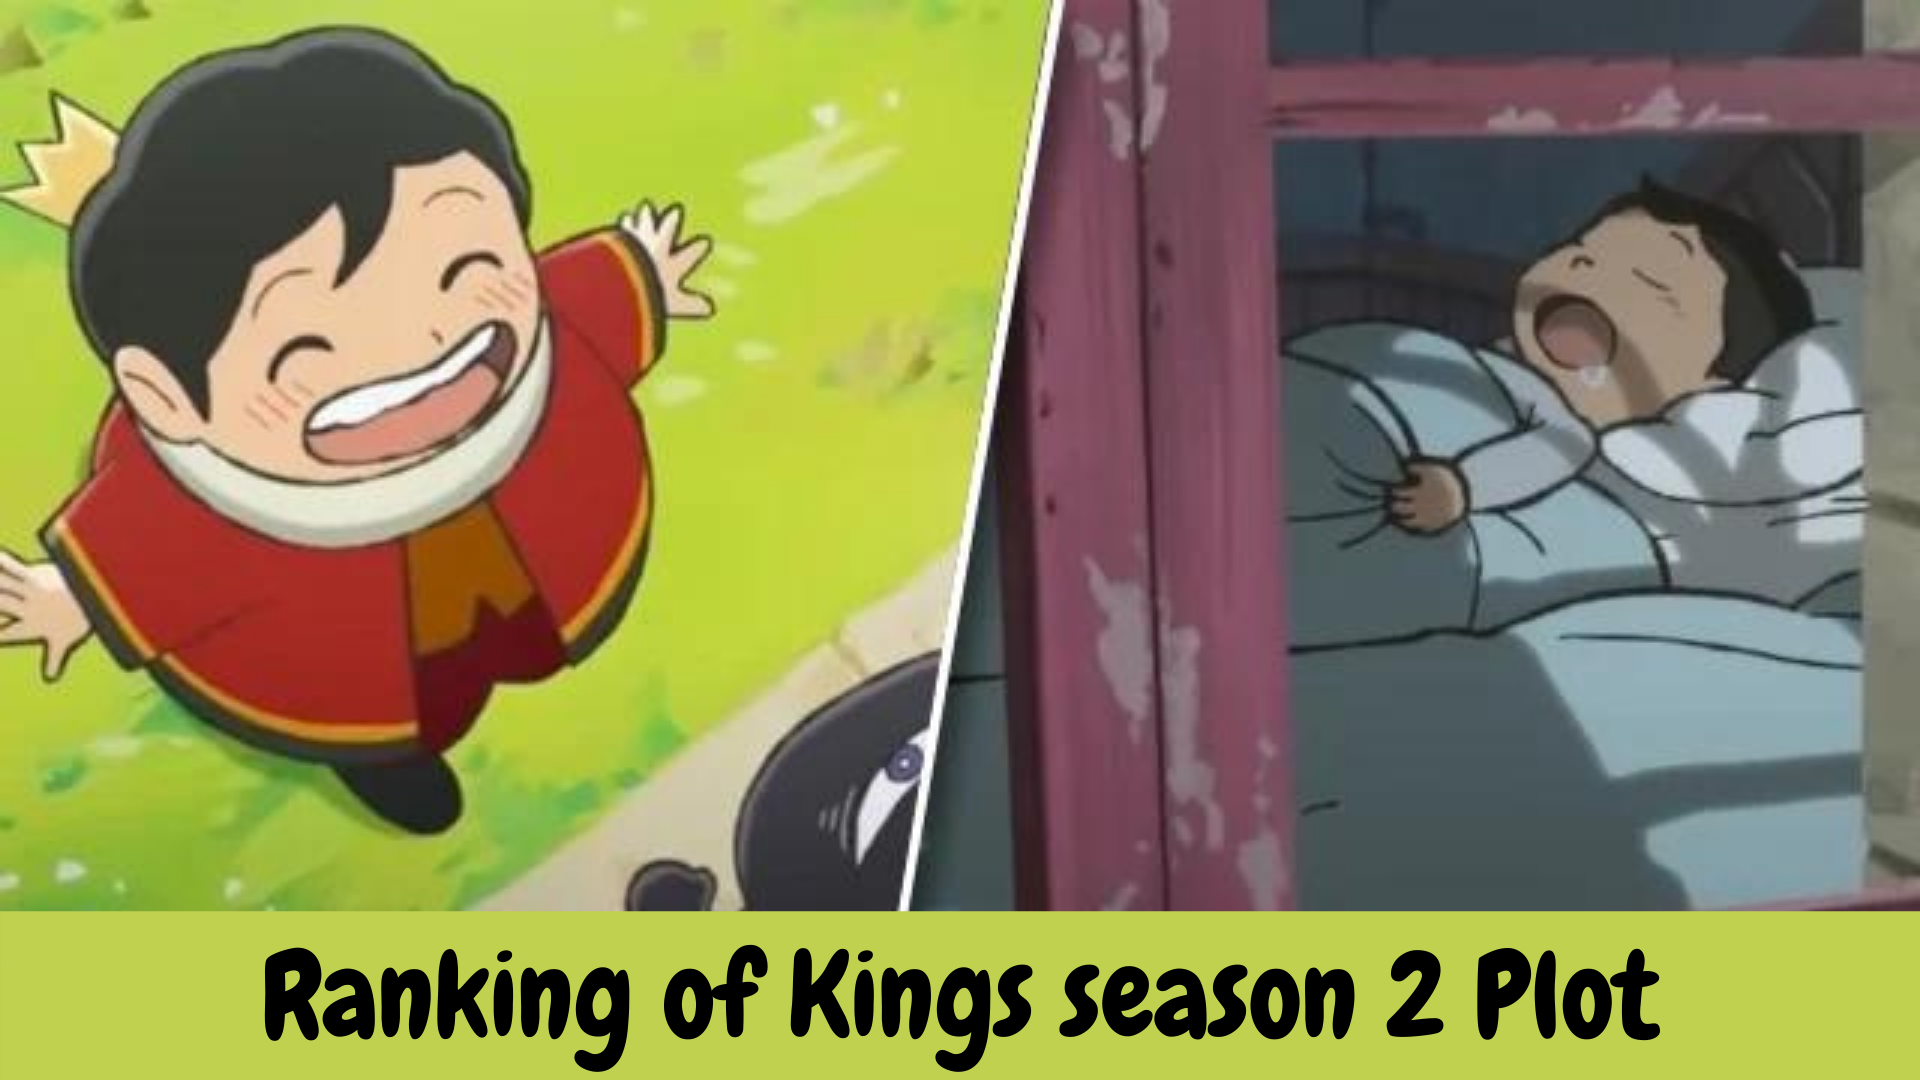 Ranking of Kings season 2 Plot